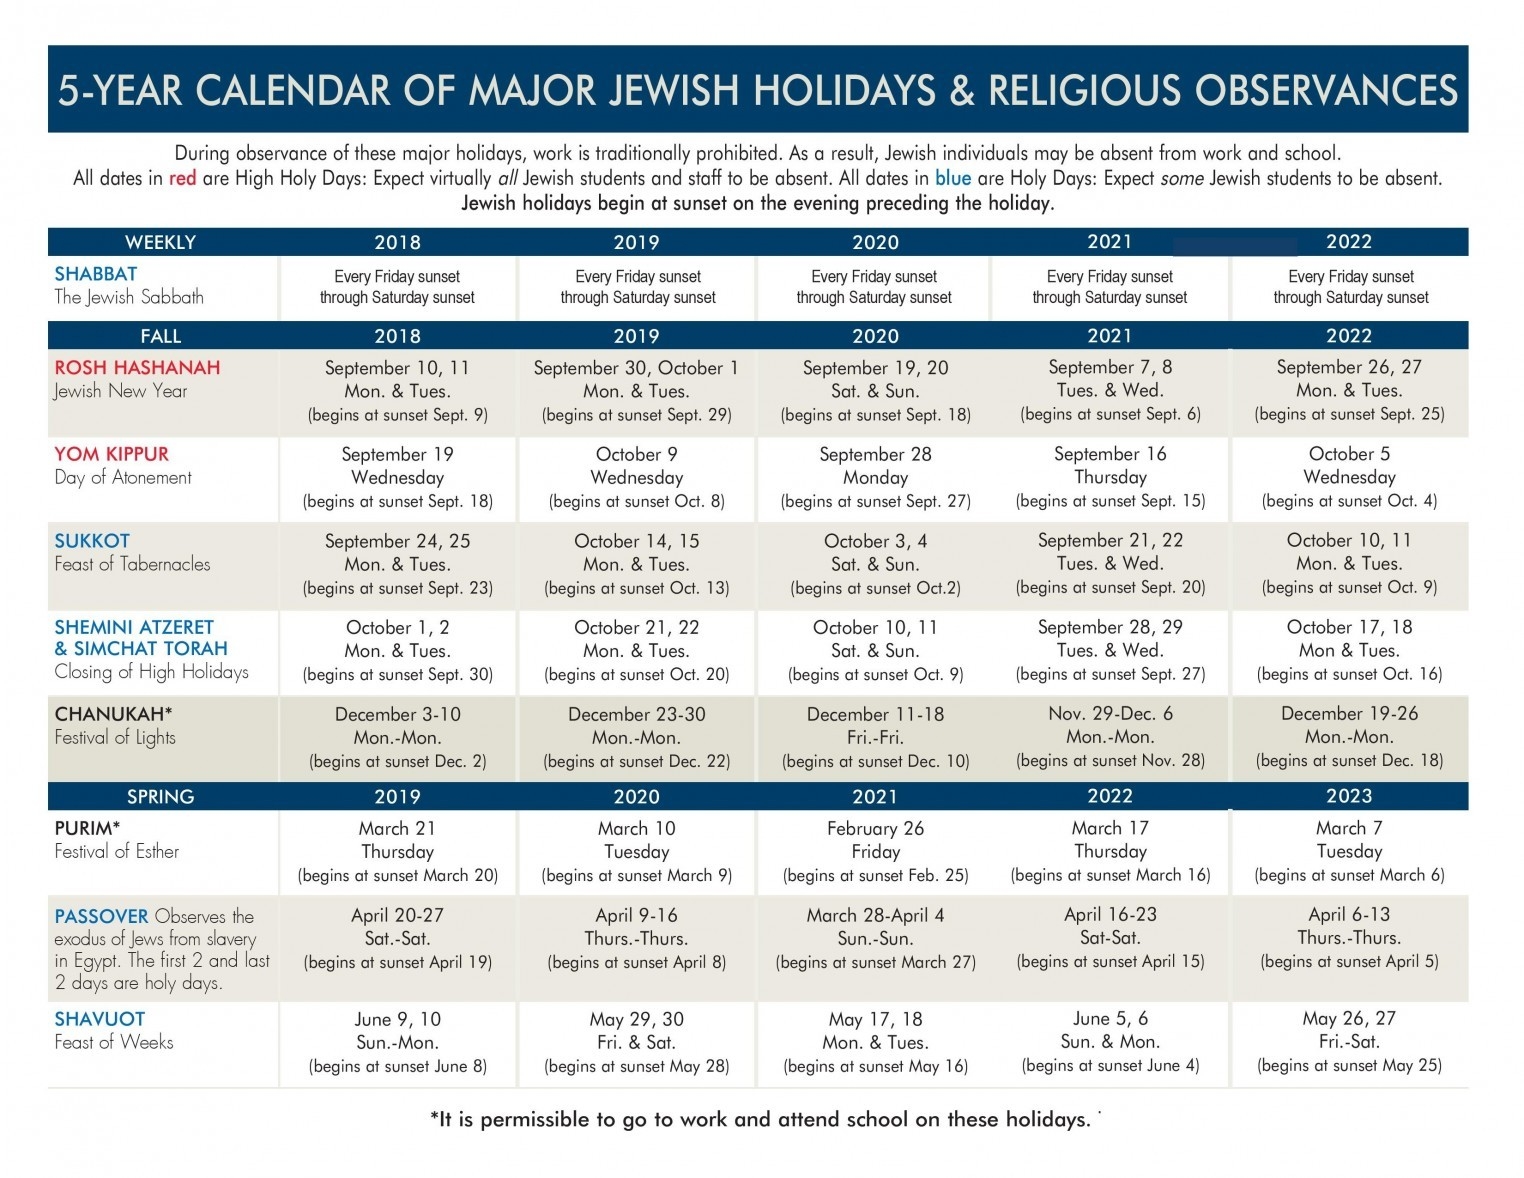 5-Year Jewish Holiday Calendar | Jewish Federation Of-October 2020 Jewish Holidays Calendar